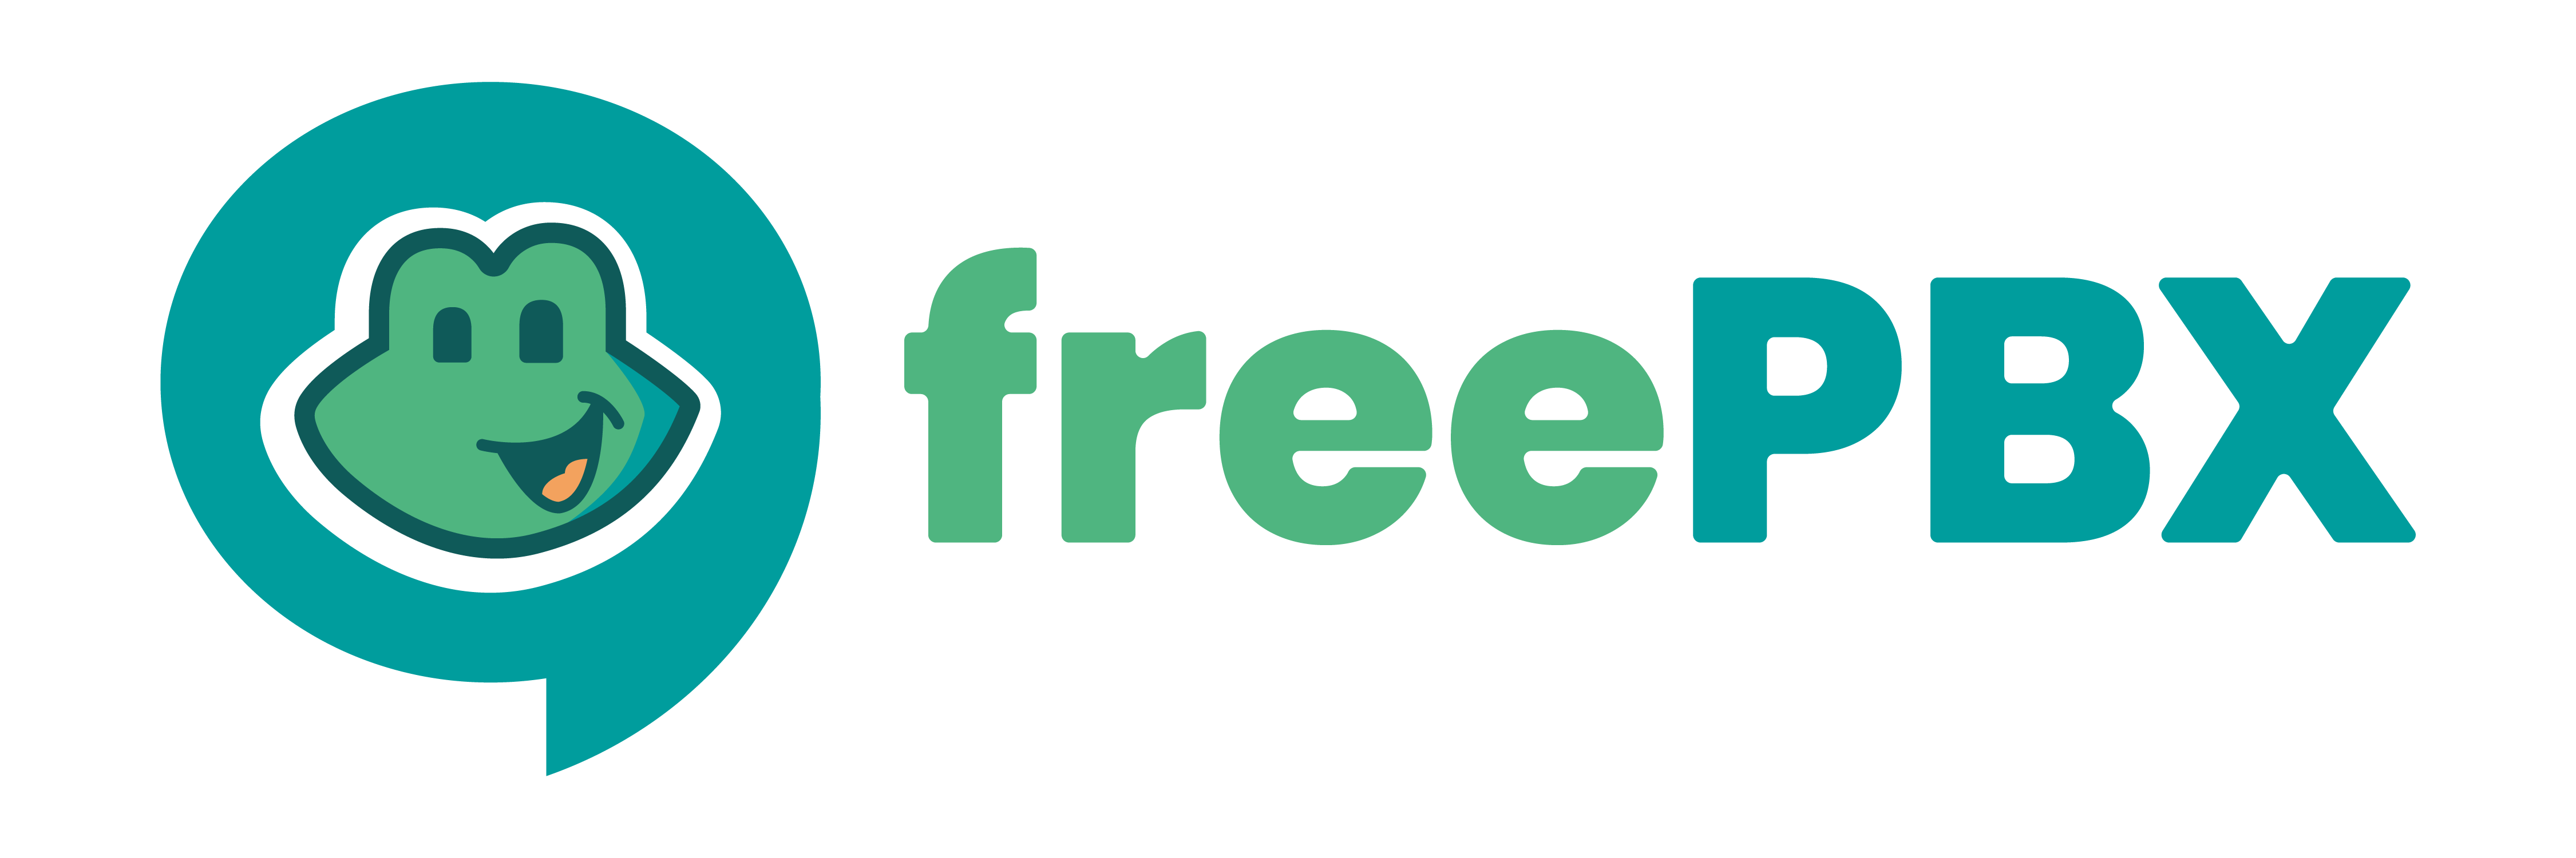 Trademark for FreePBX